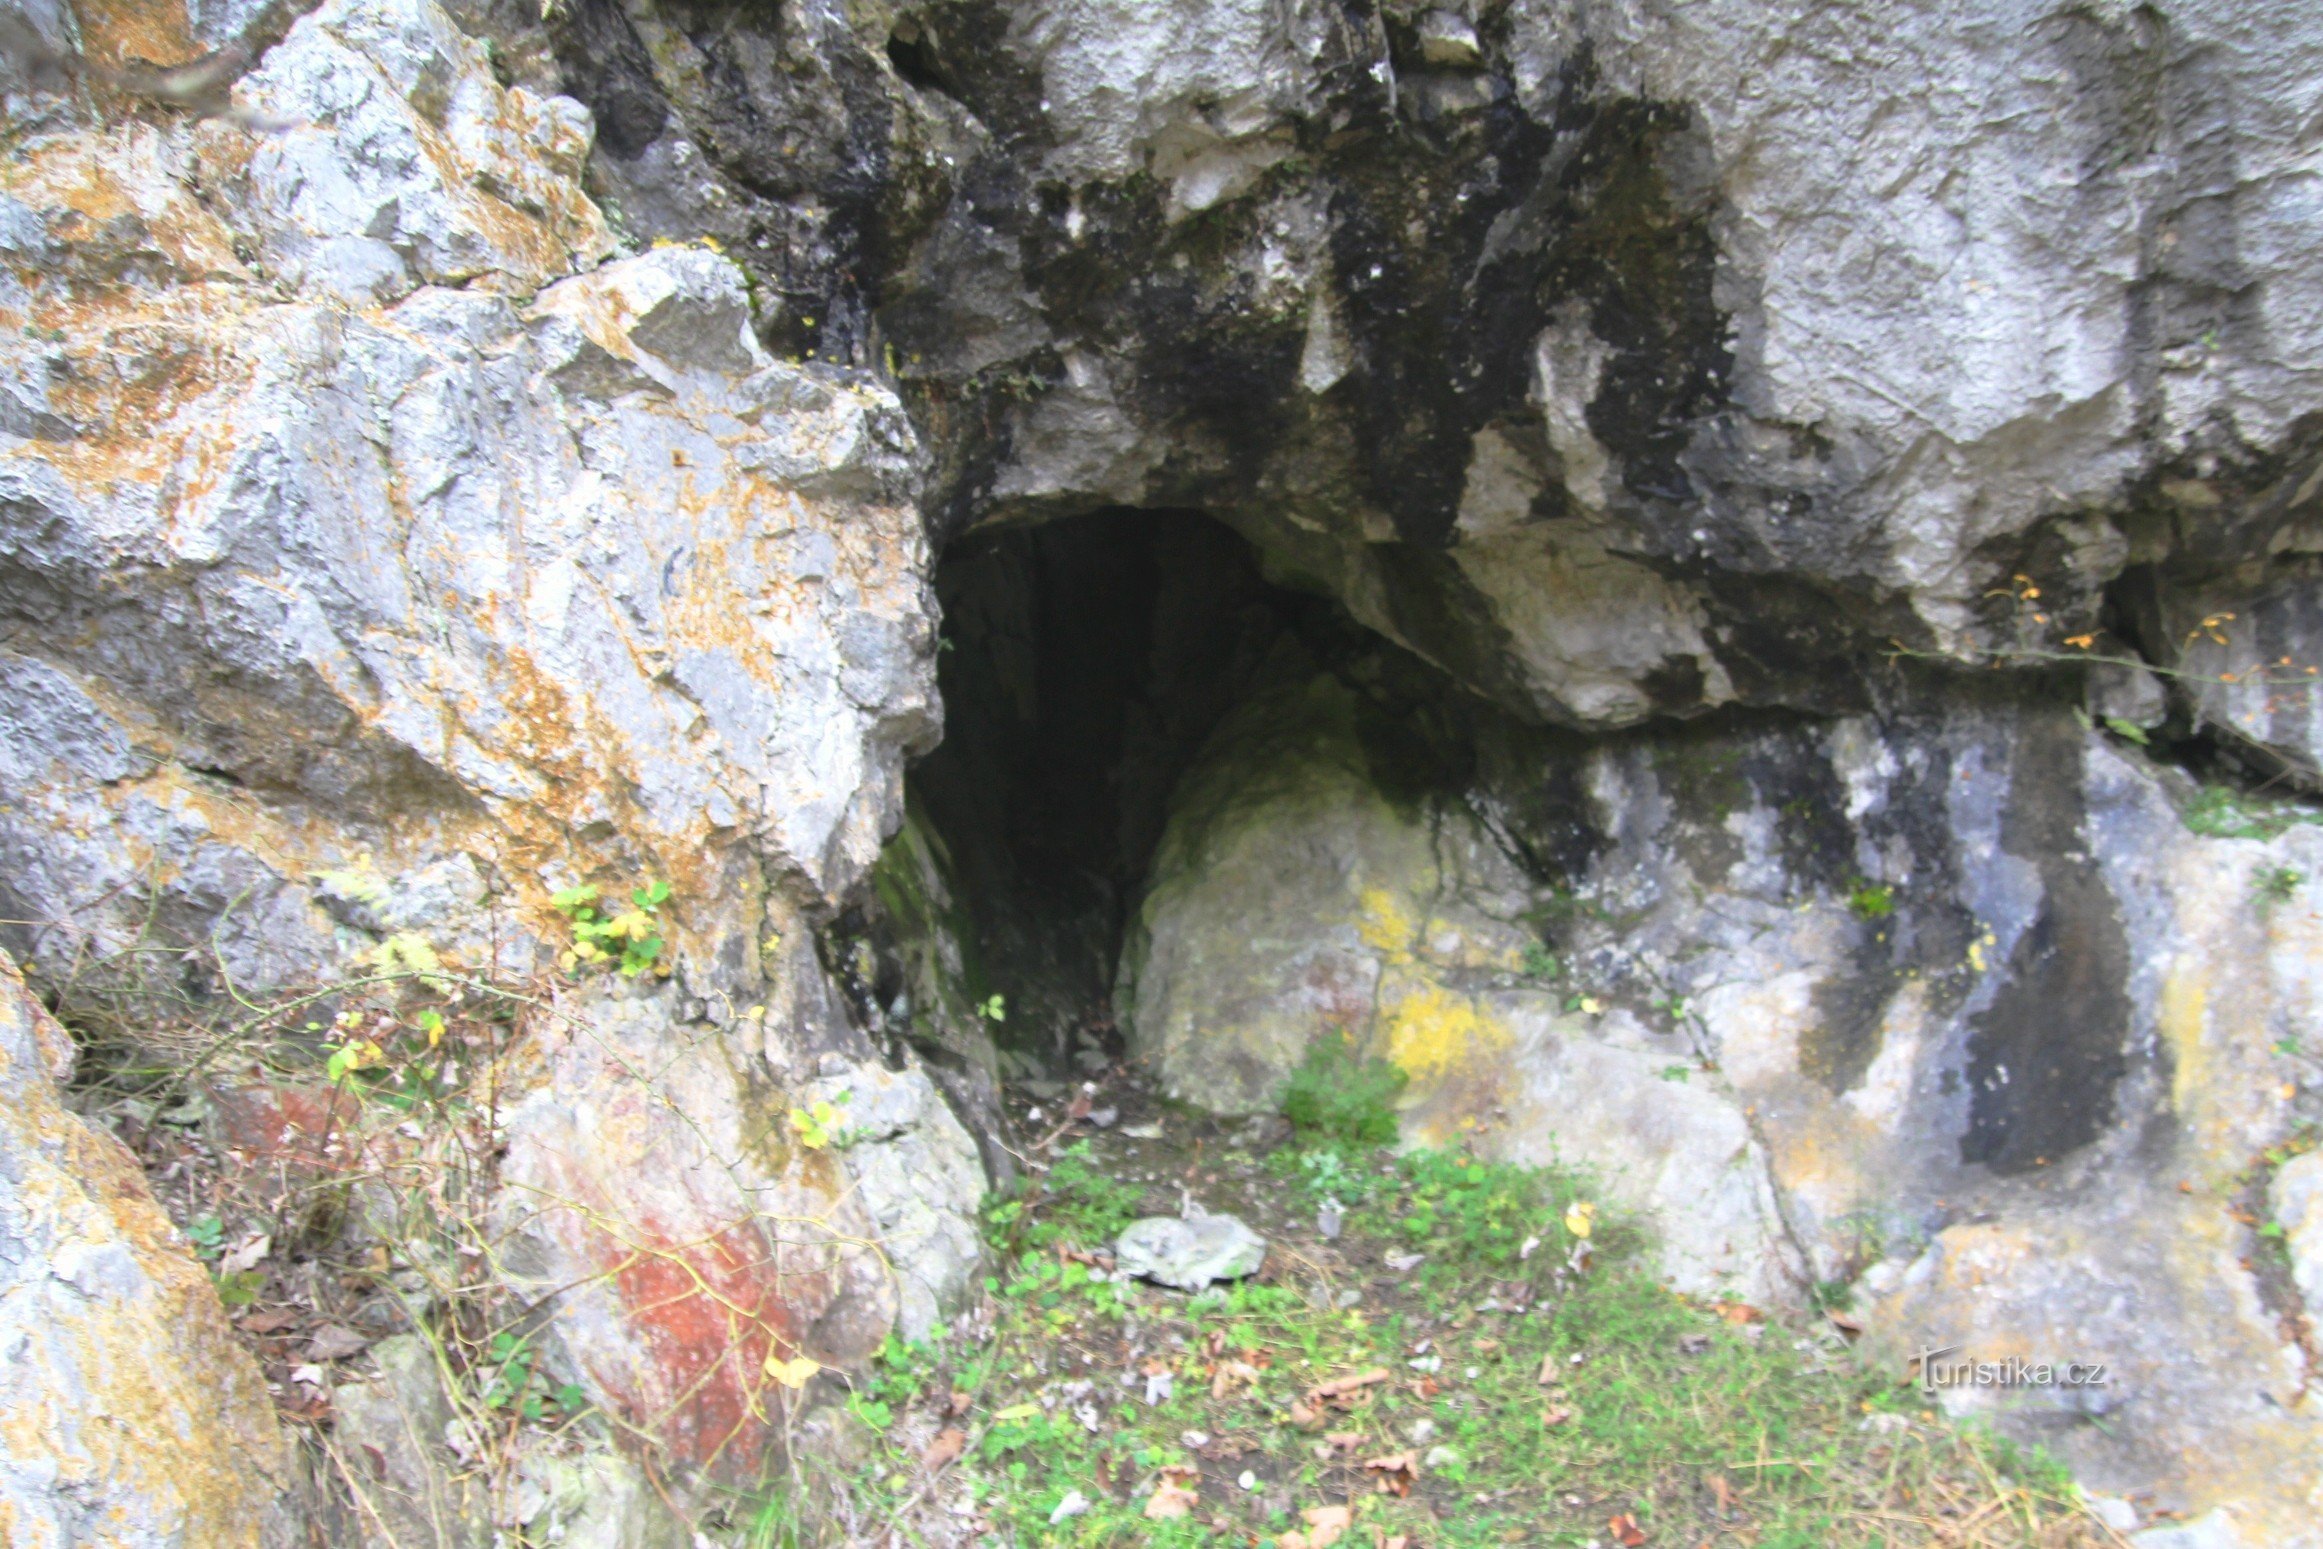 Lagere ingang van de grot